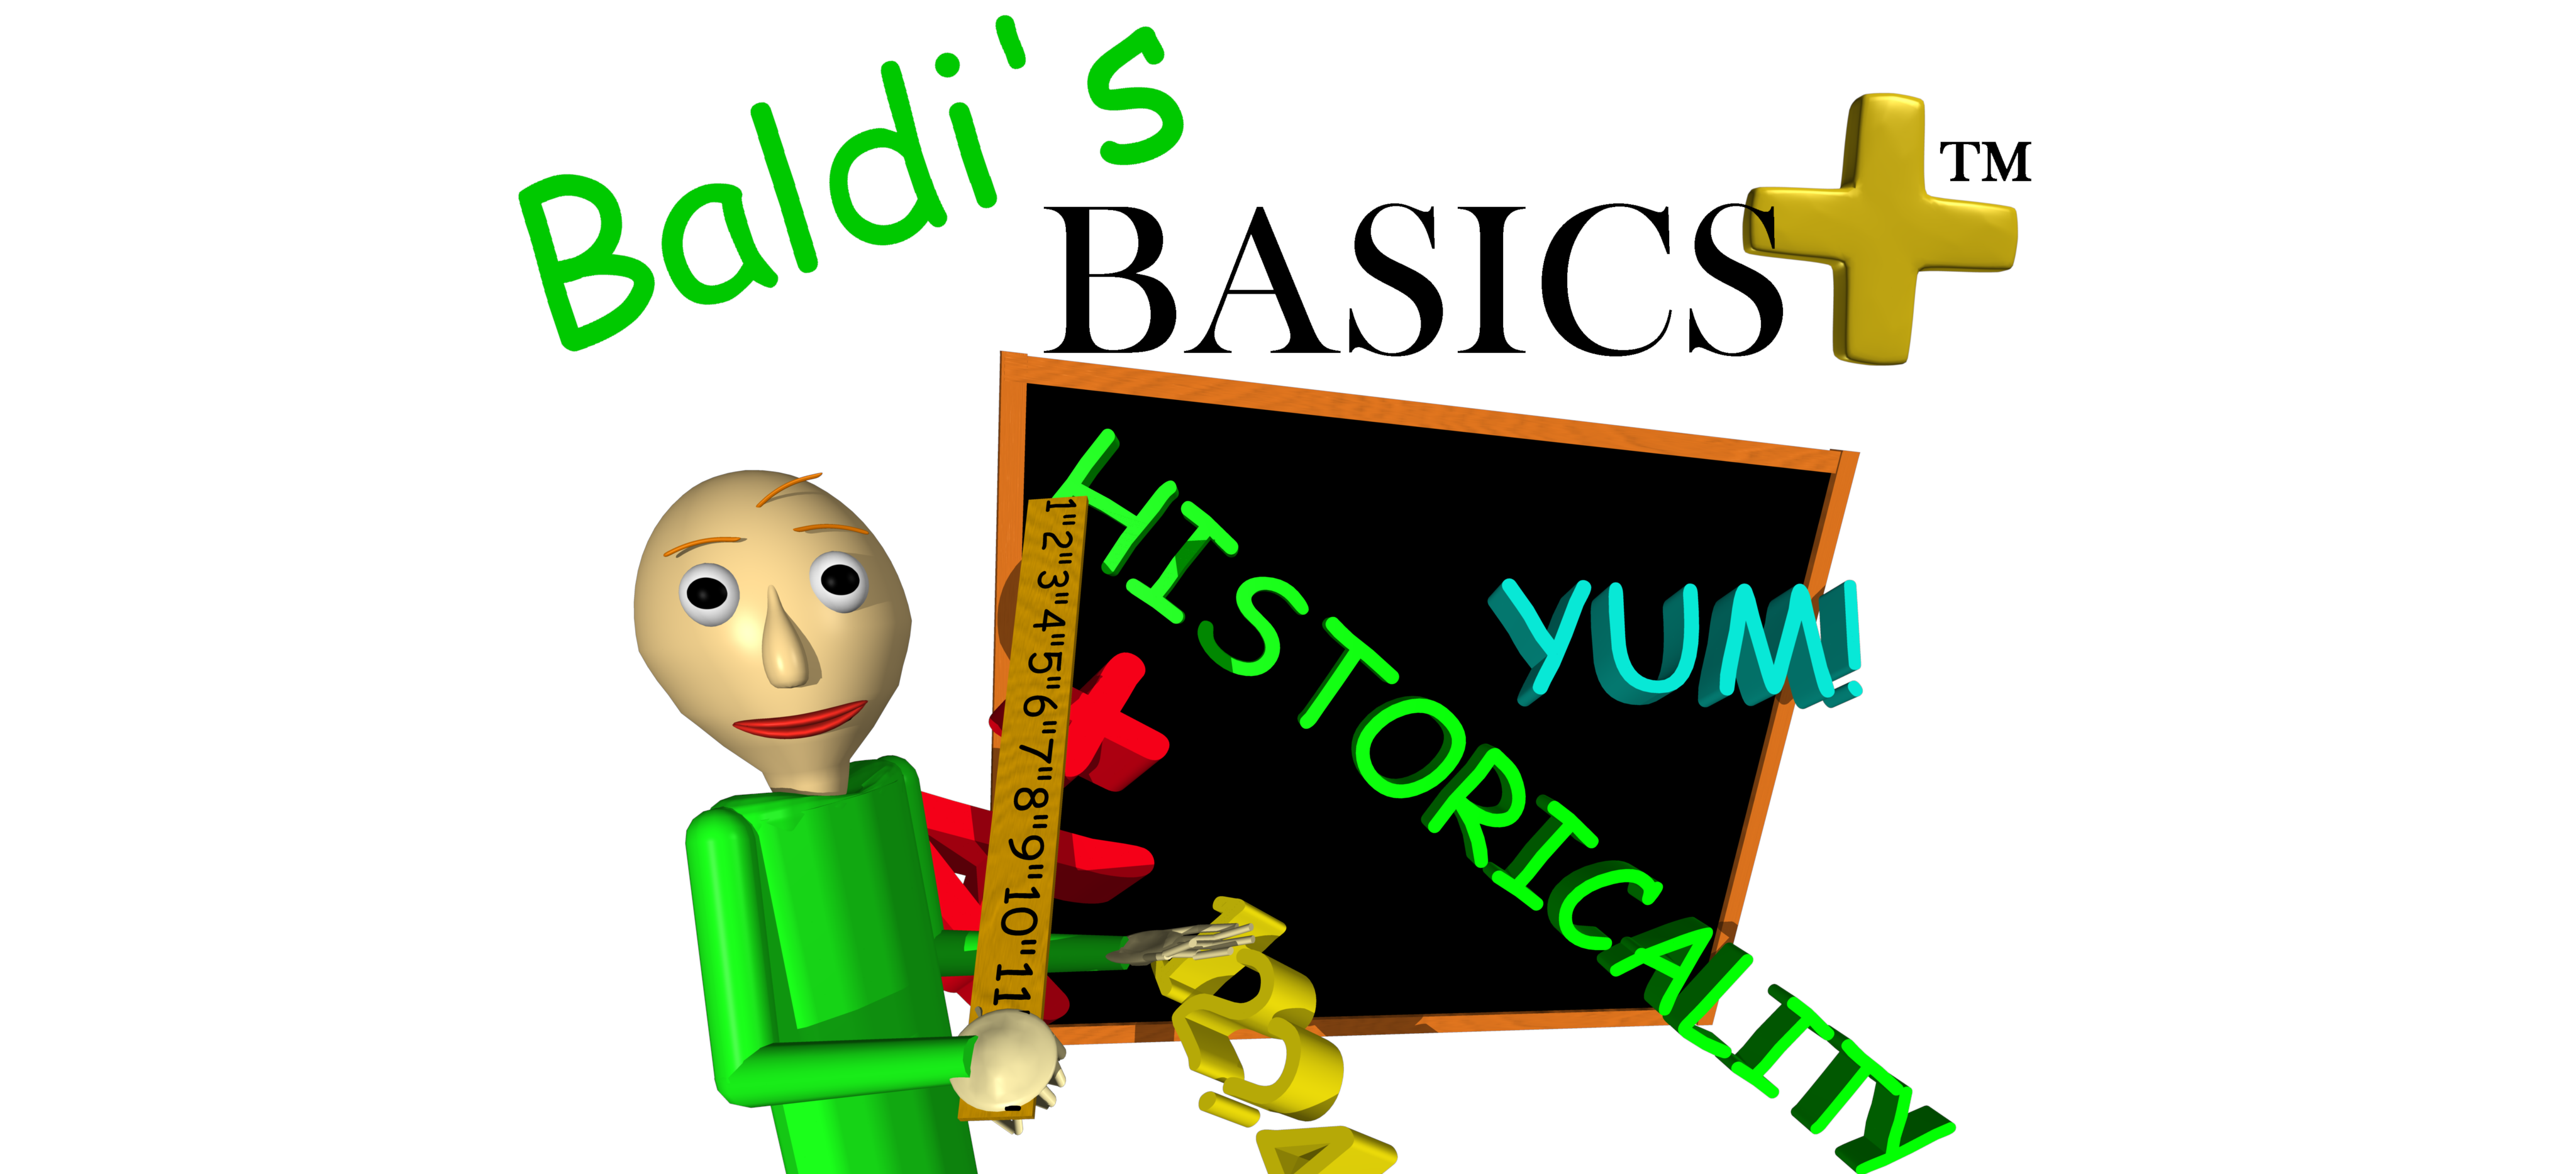 Baldis Basics In Education And Learning